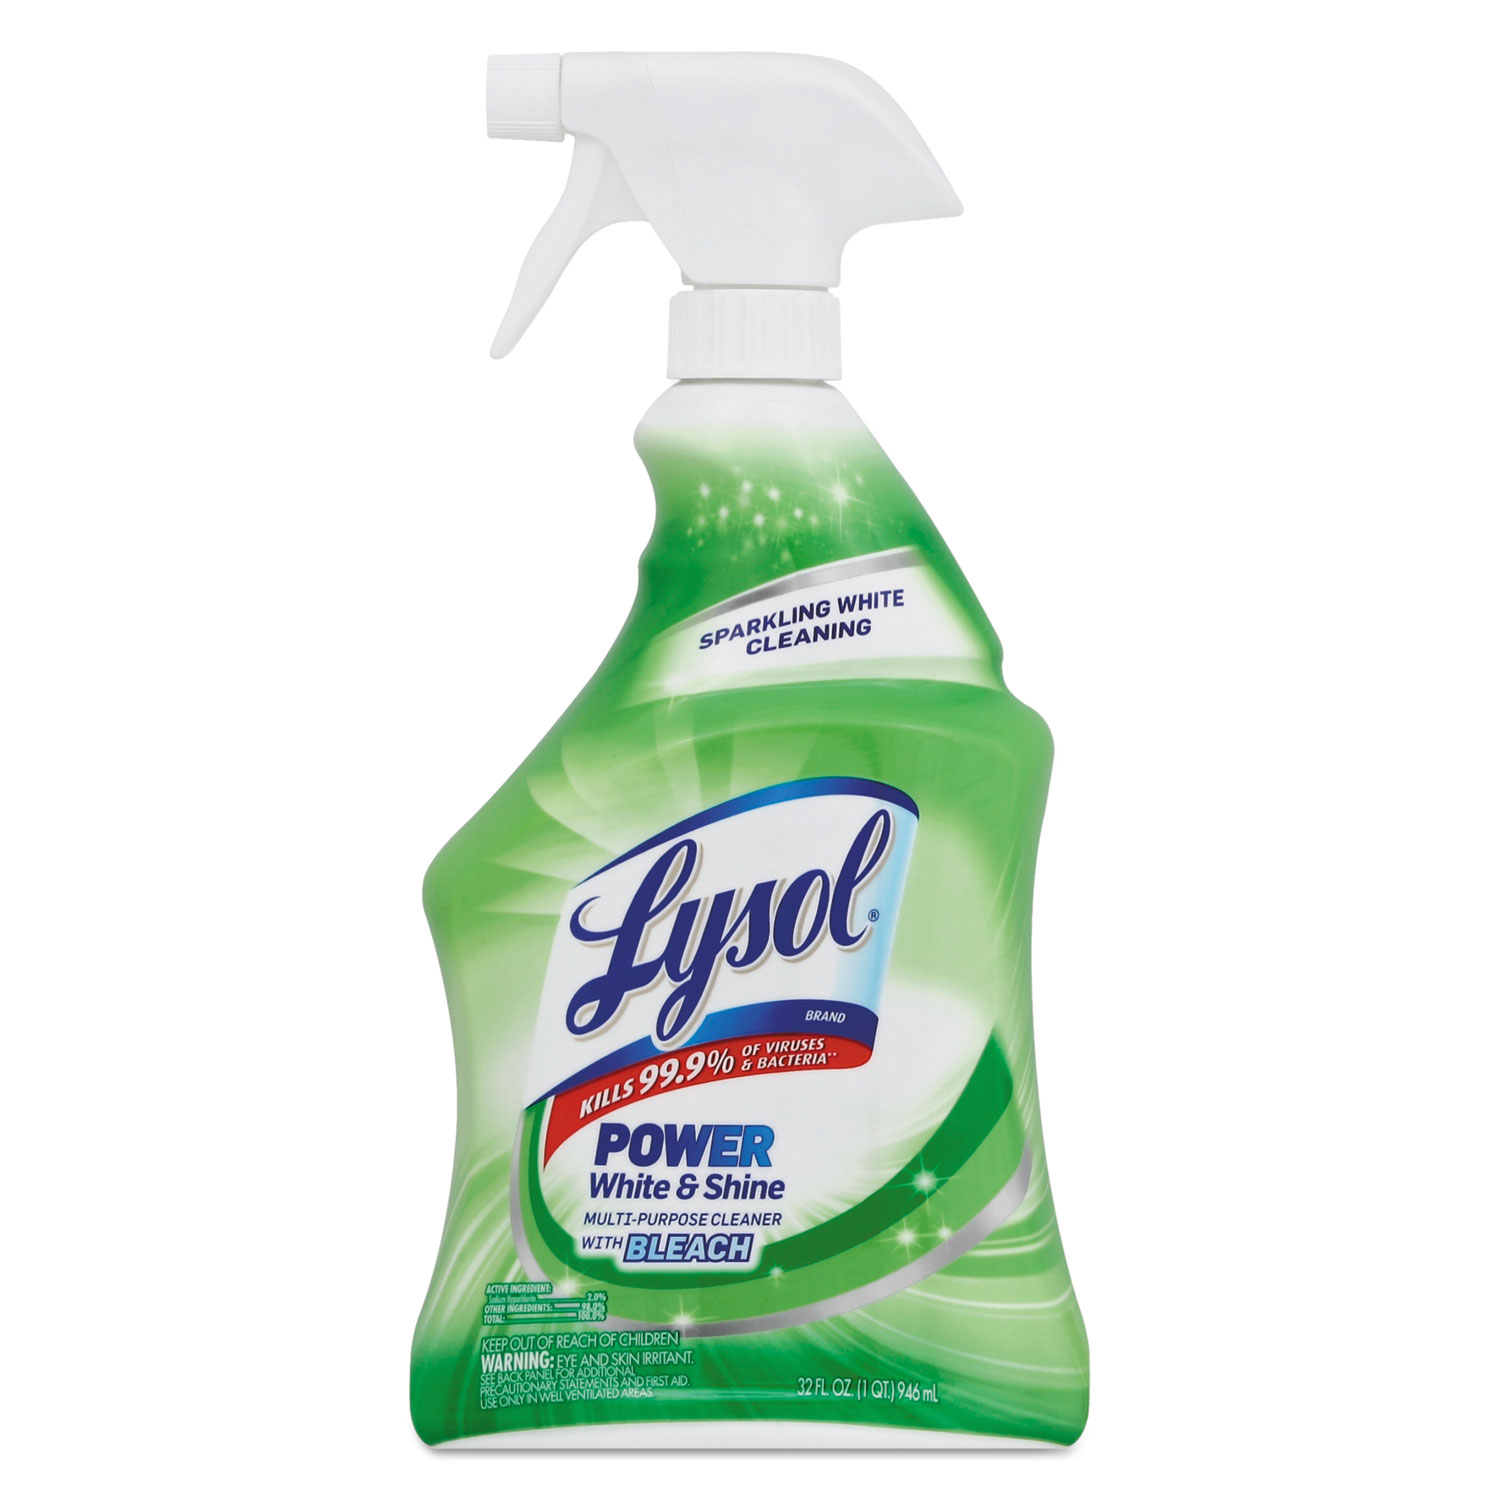 Power White & Shine Multi-Purpose Cleaner with Bleach, 32oz Spray Bottle, 12/CT